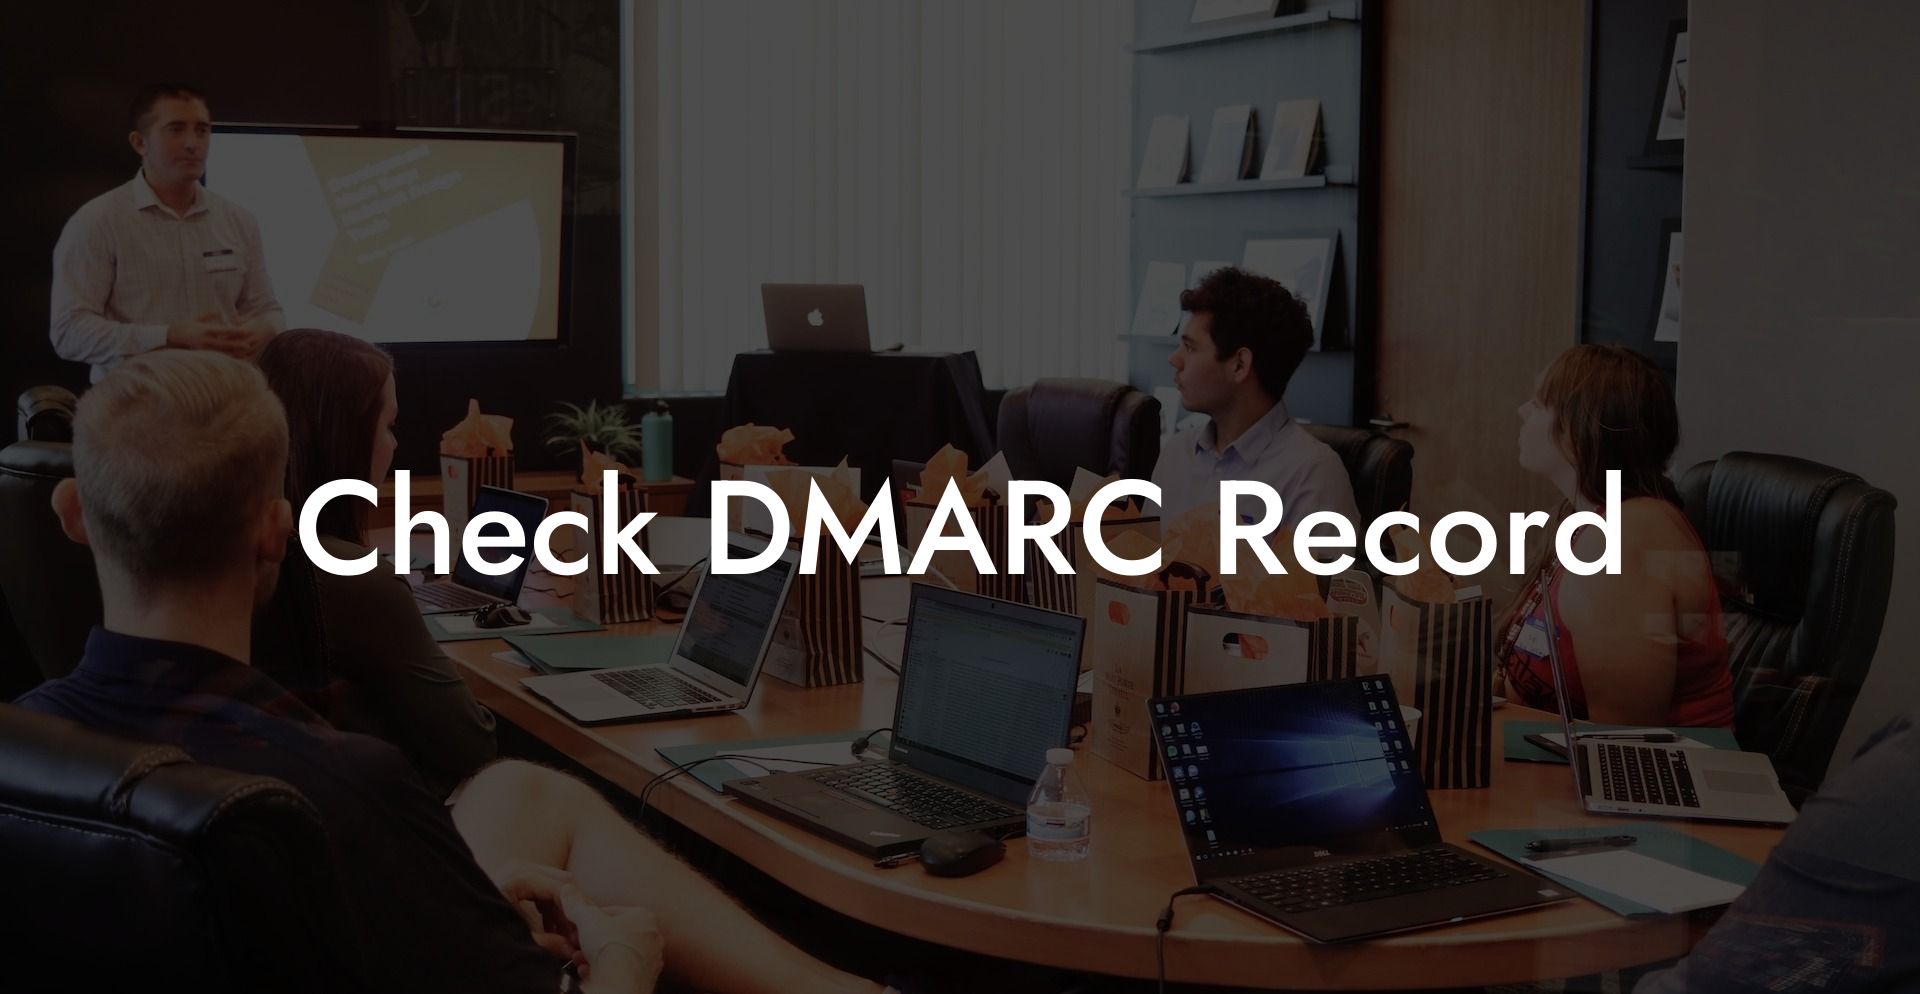 Check DMARC Record